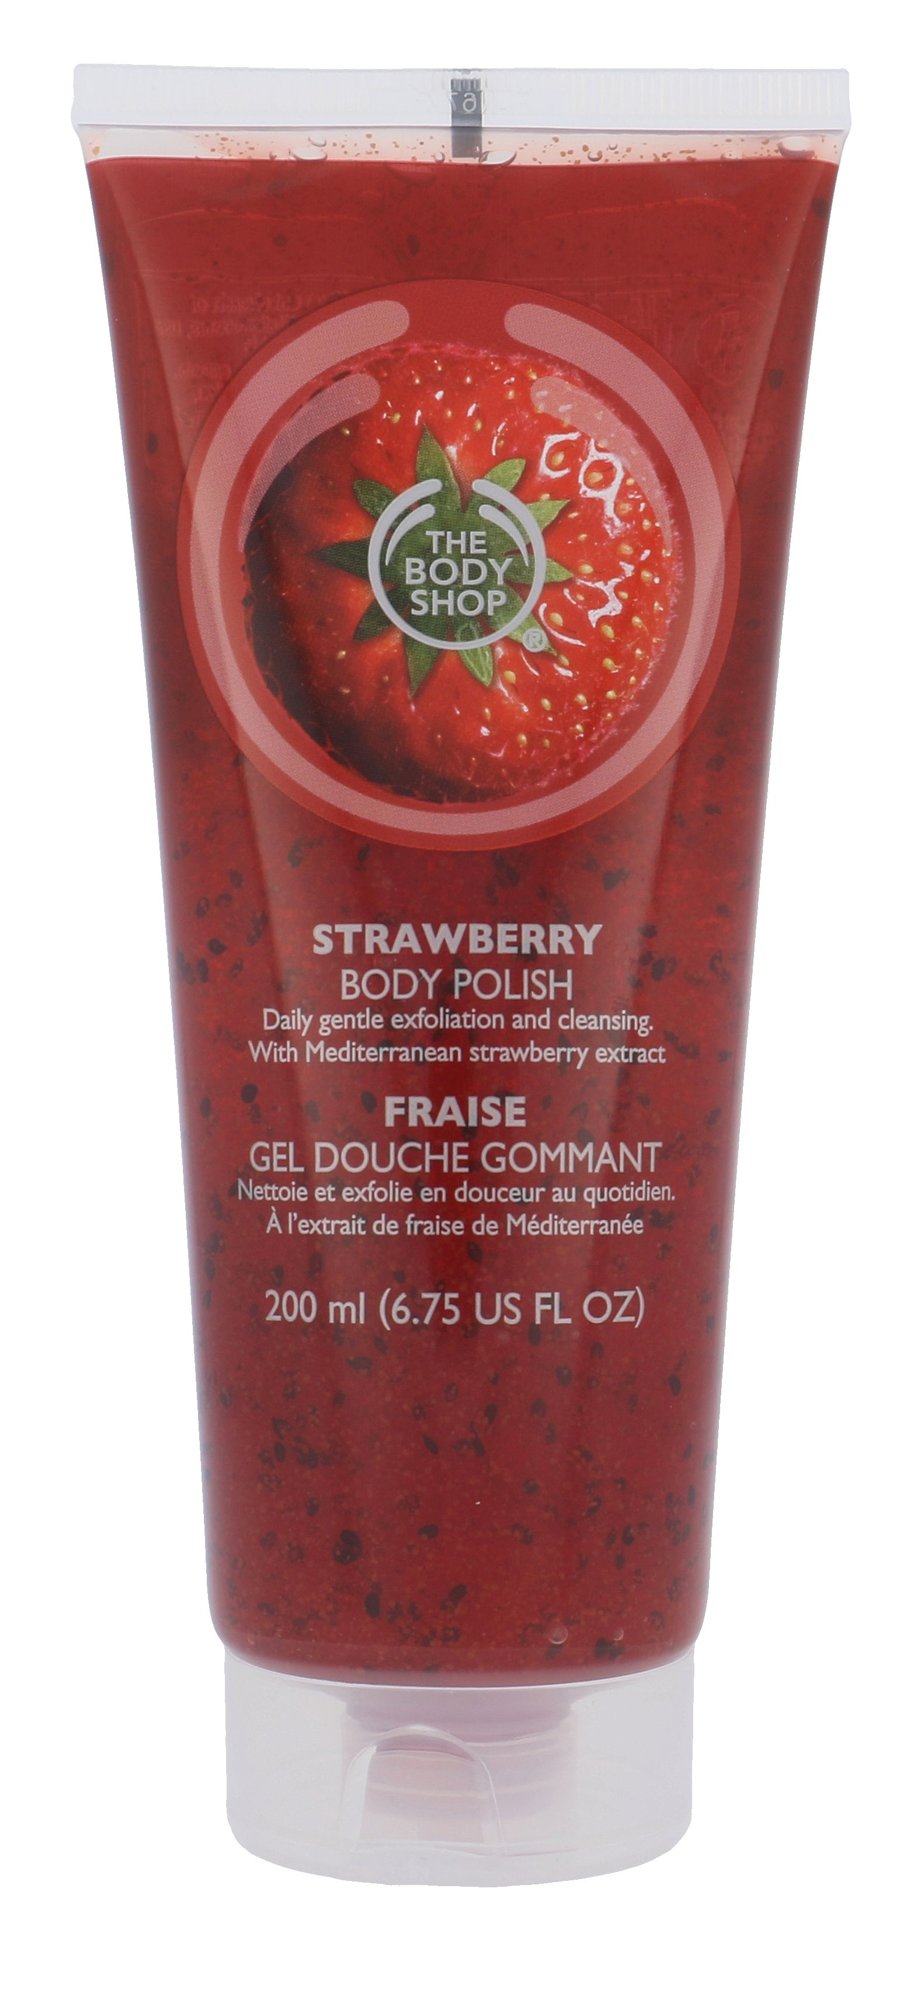 The Body Shop Strawberry Body Polish